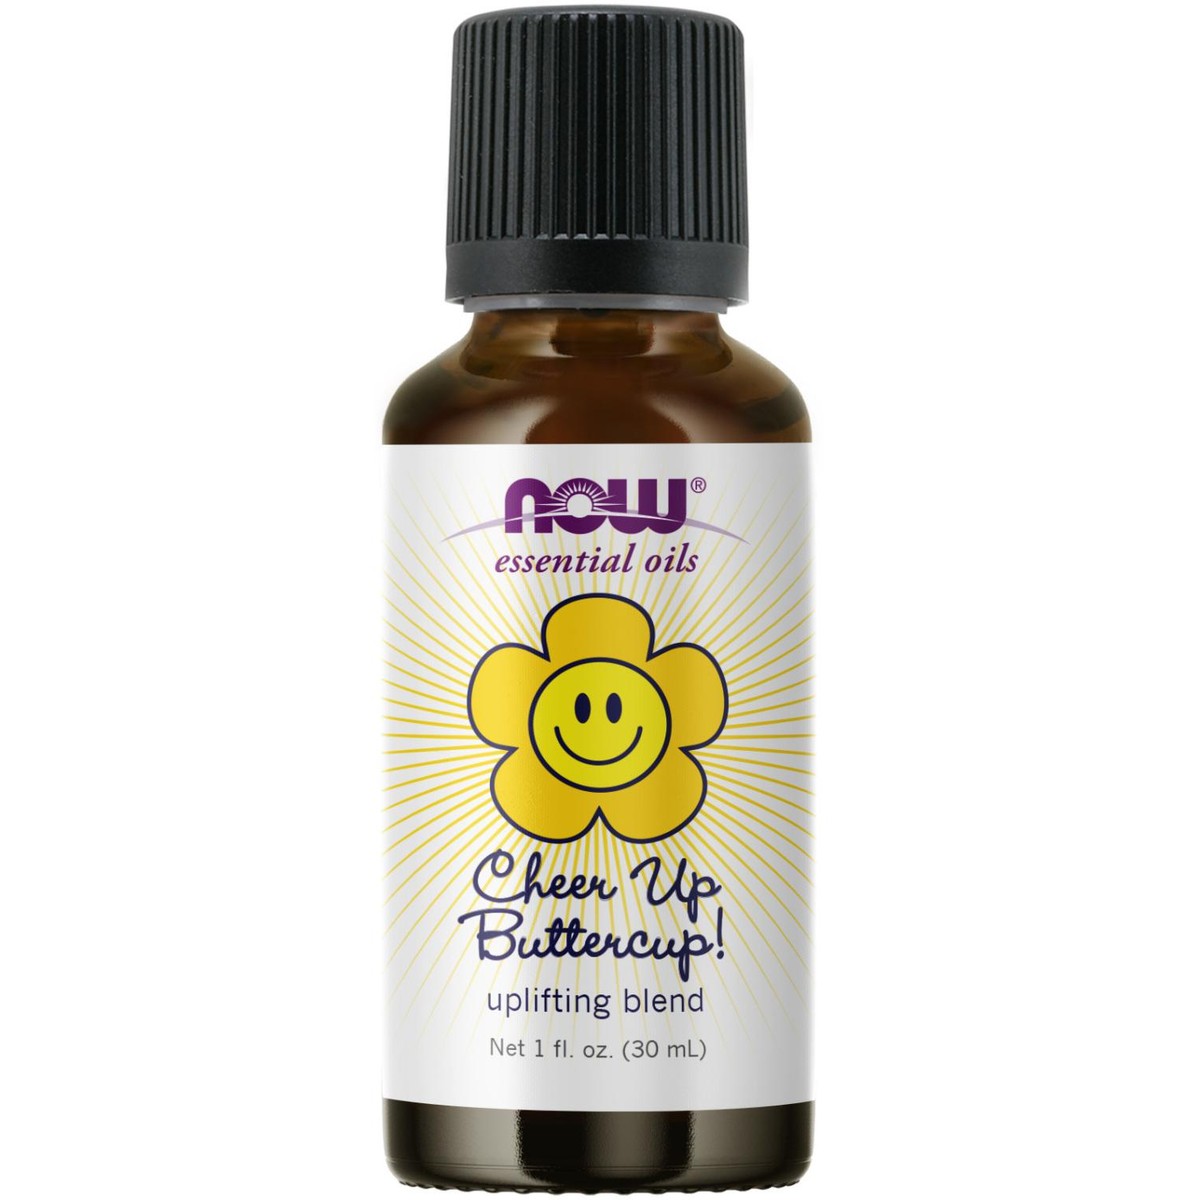 Bath Oils, Bath & Body, Health & Beauty - PicClick UK